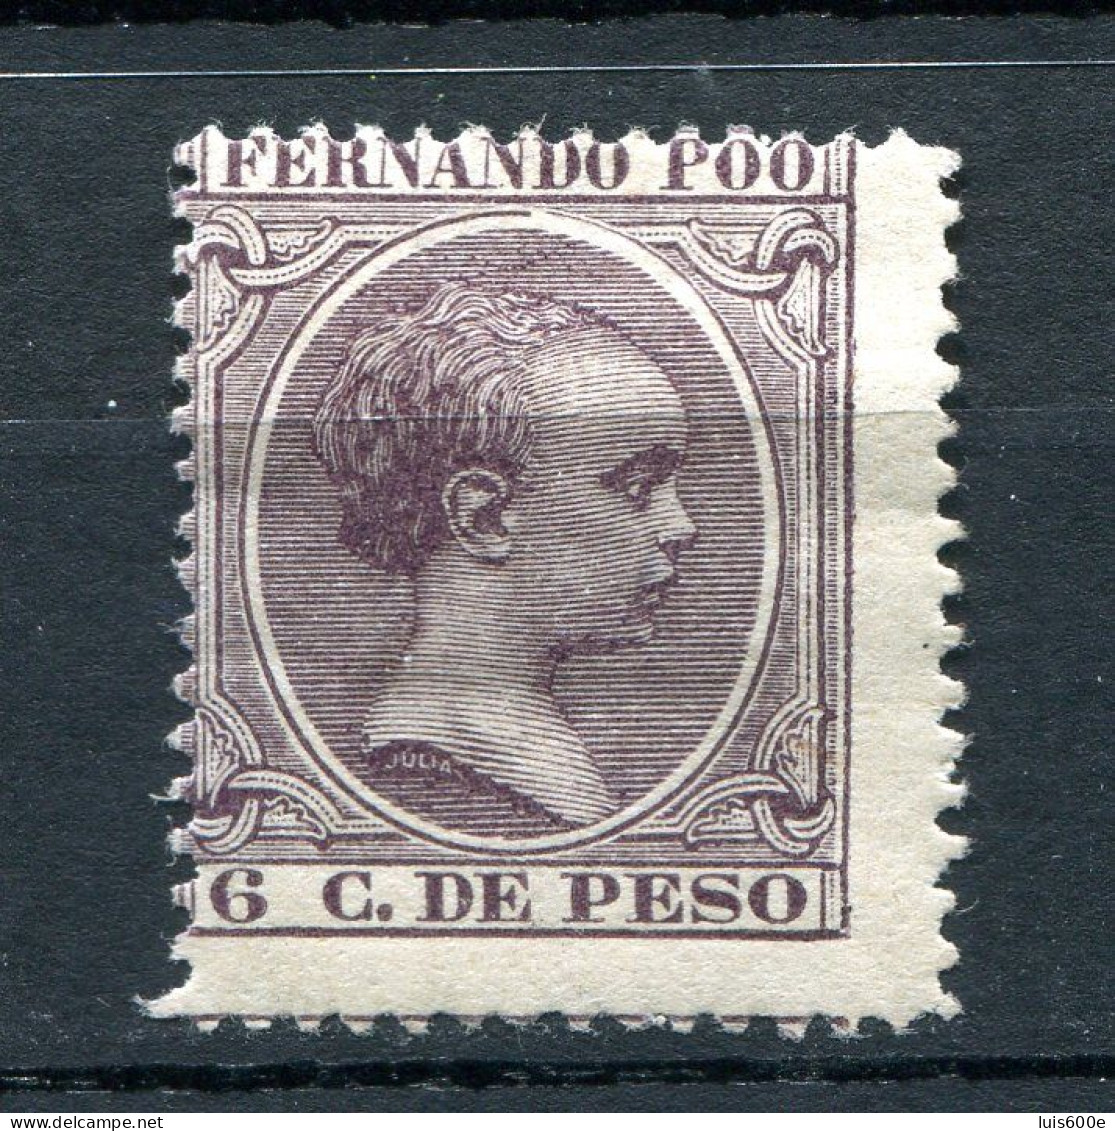 1894/96.FERNANDO POO.EDIFIL 15*.NUEVO CON FIJASELLOS(MH).CATALOGO 23€ - Fernando Po